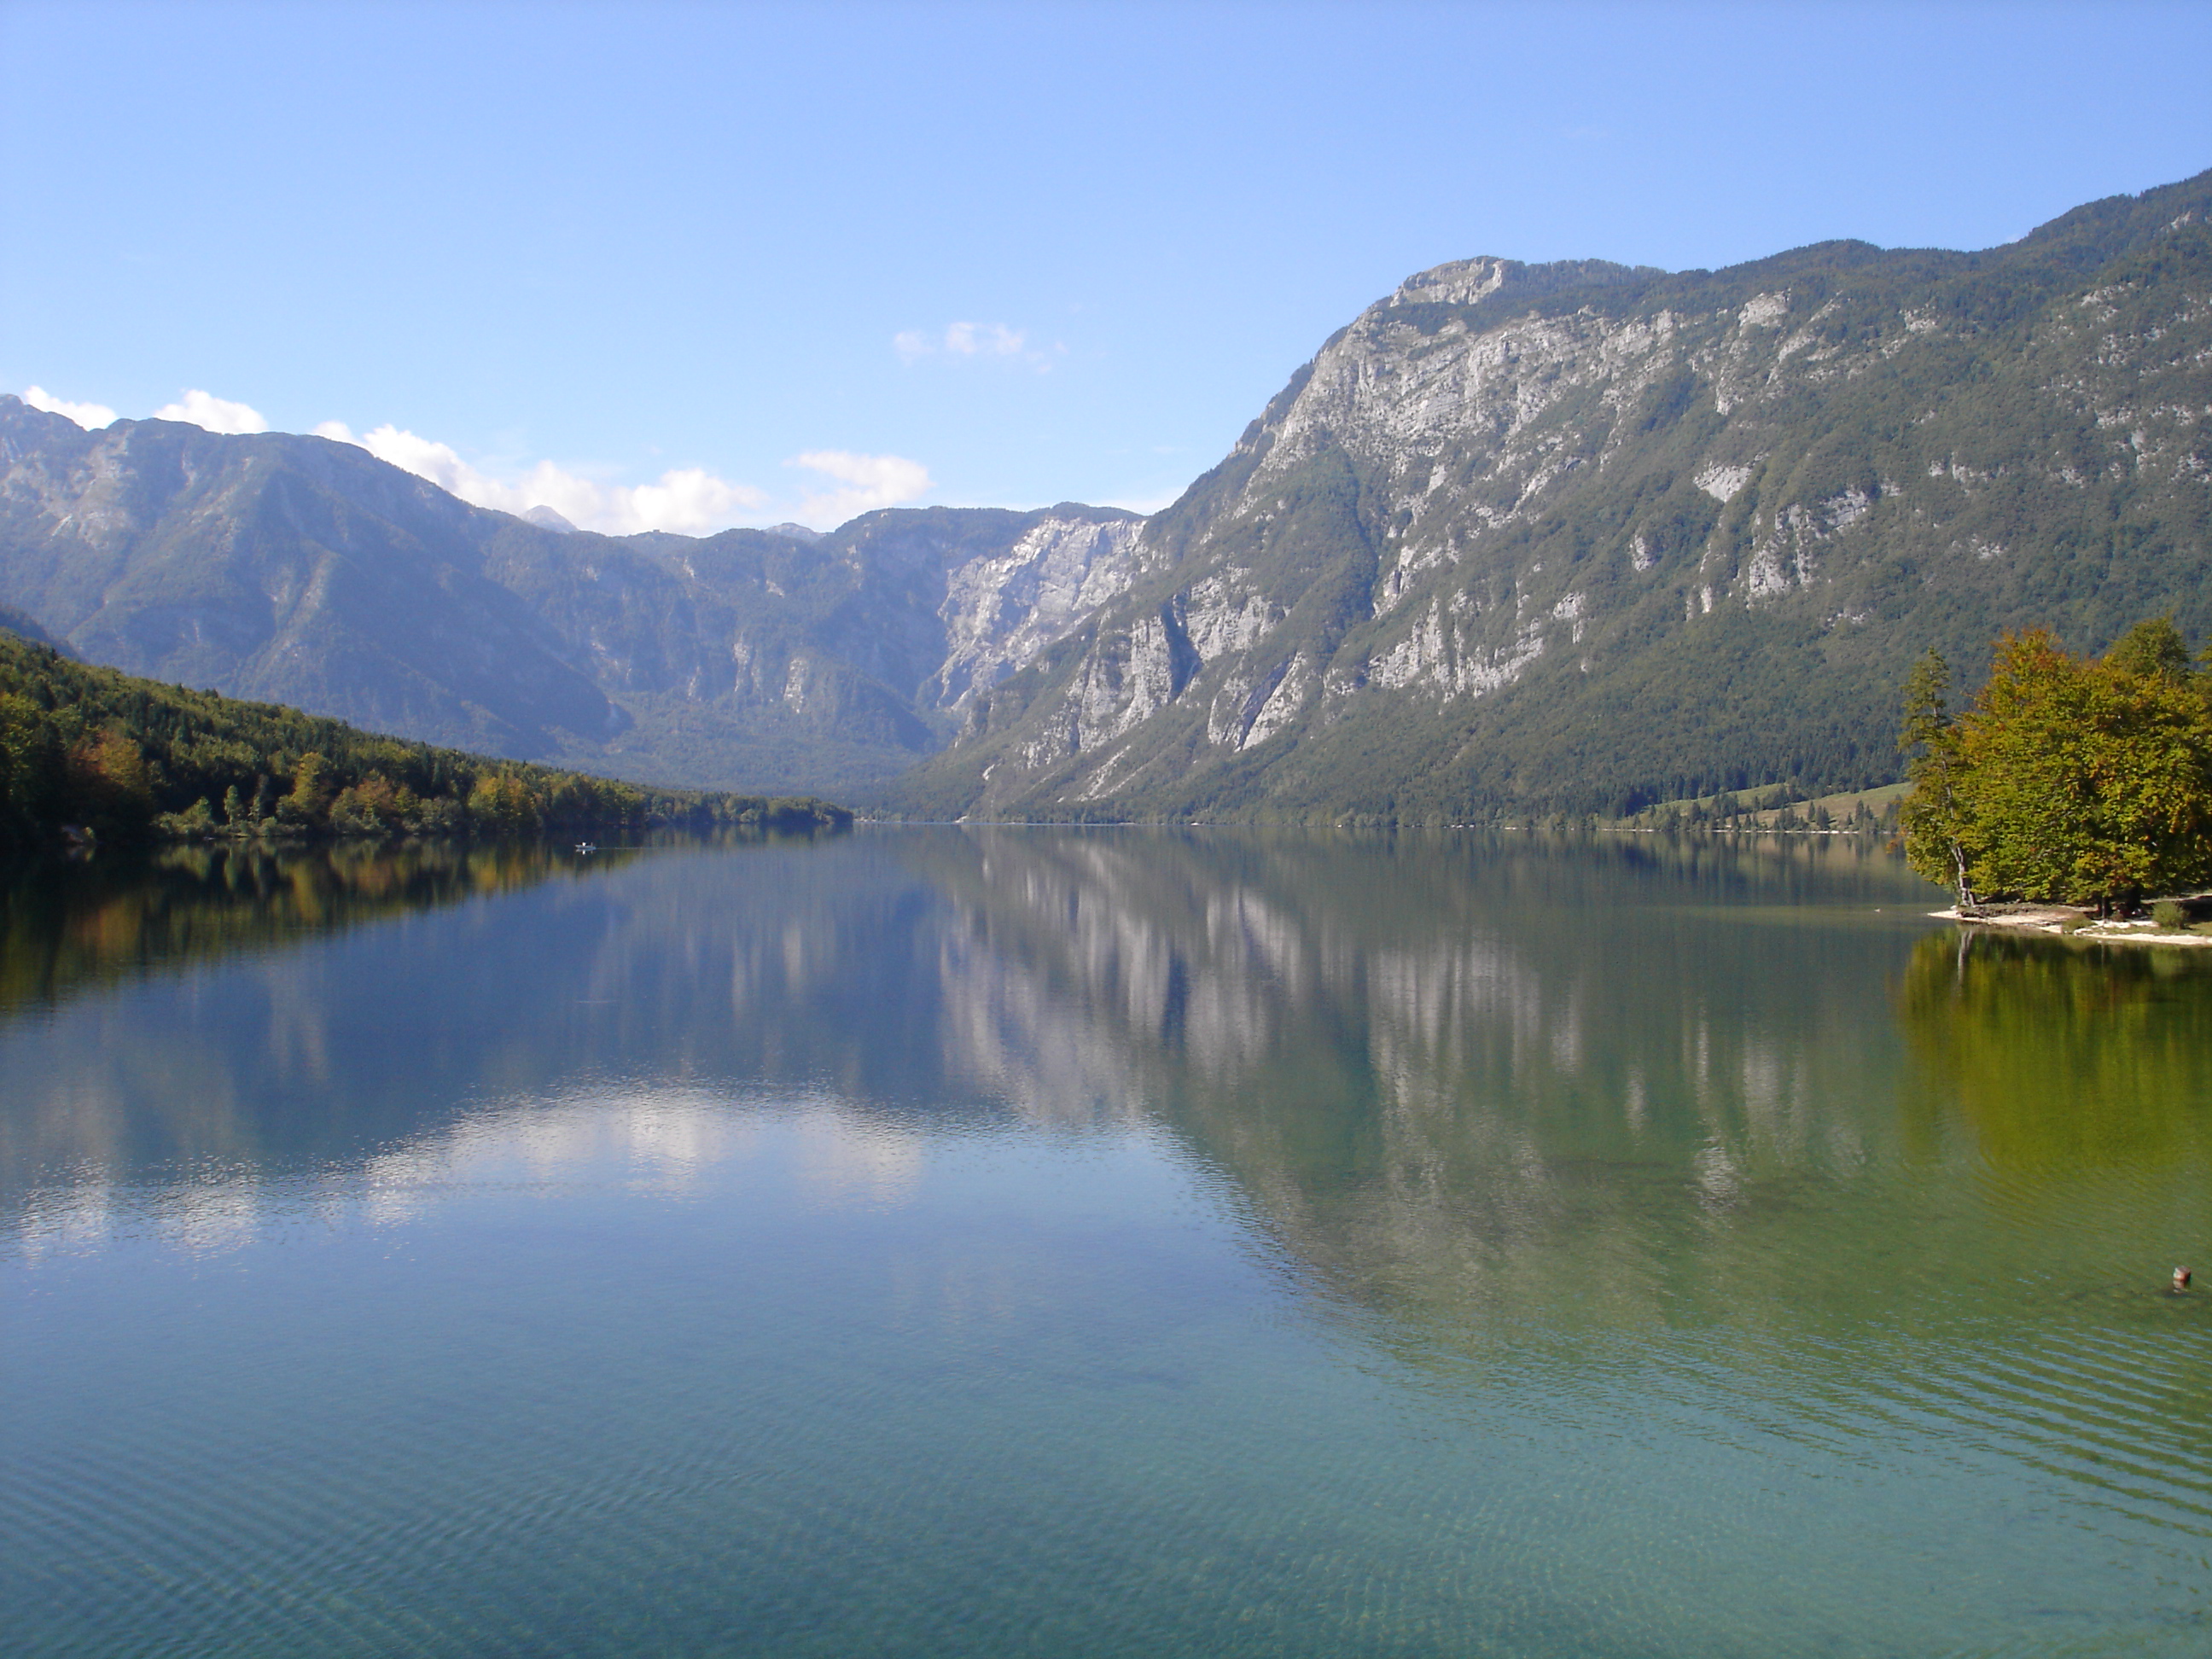 Bohinjska Lake in the mountains of Northern Slovenia